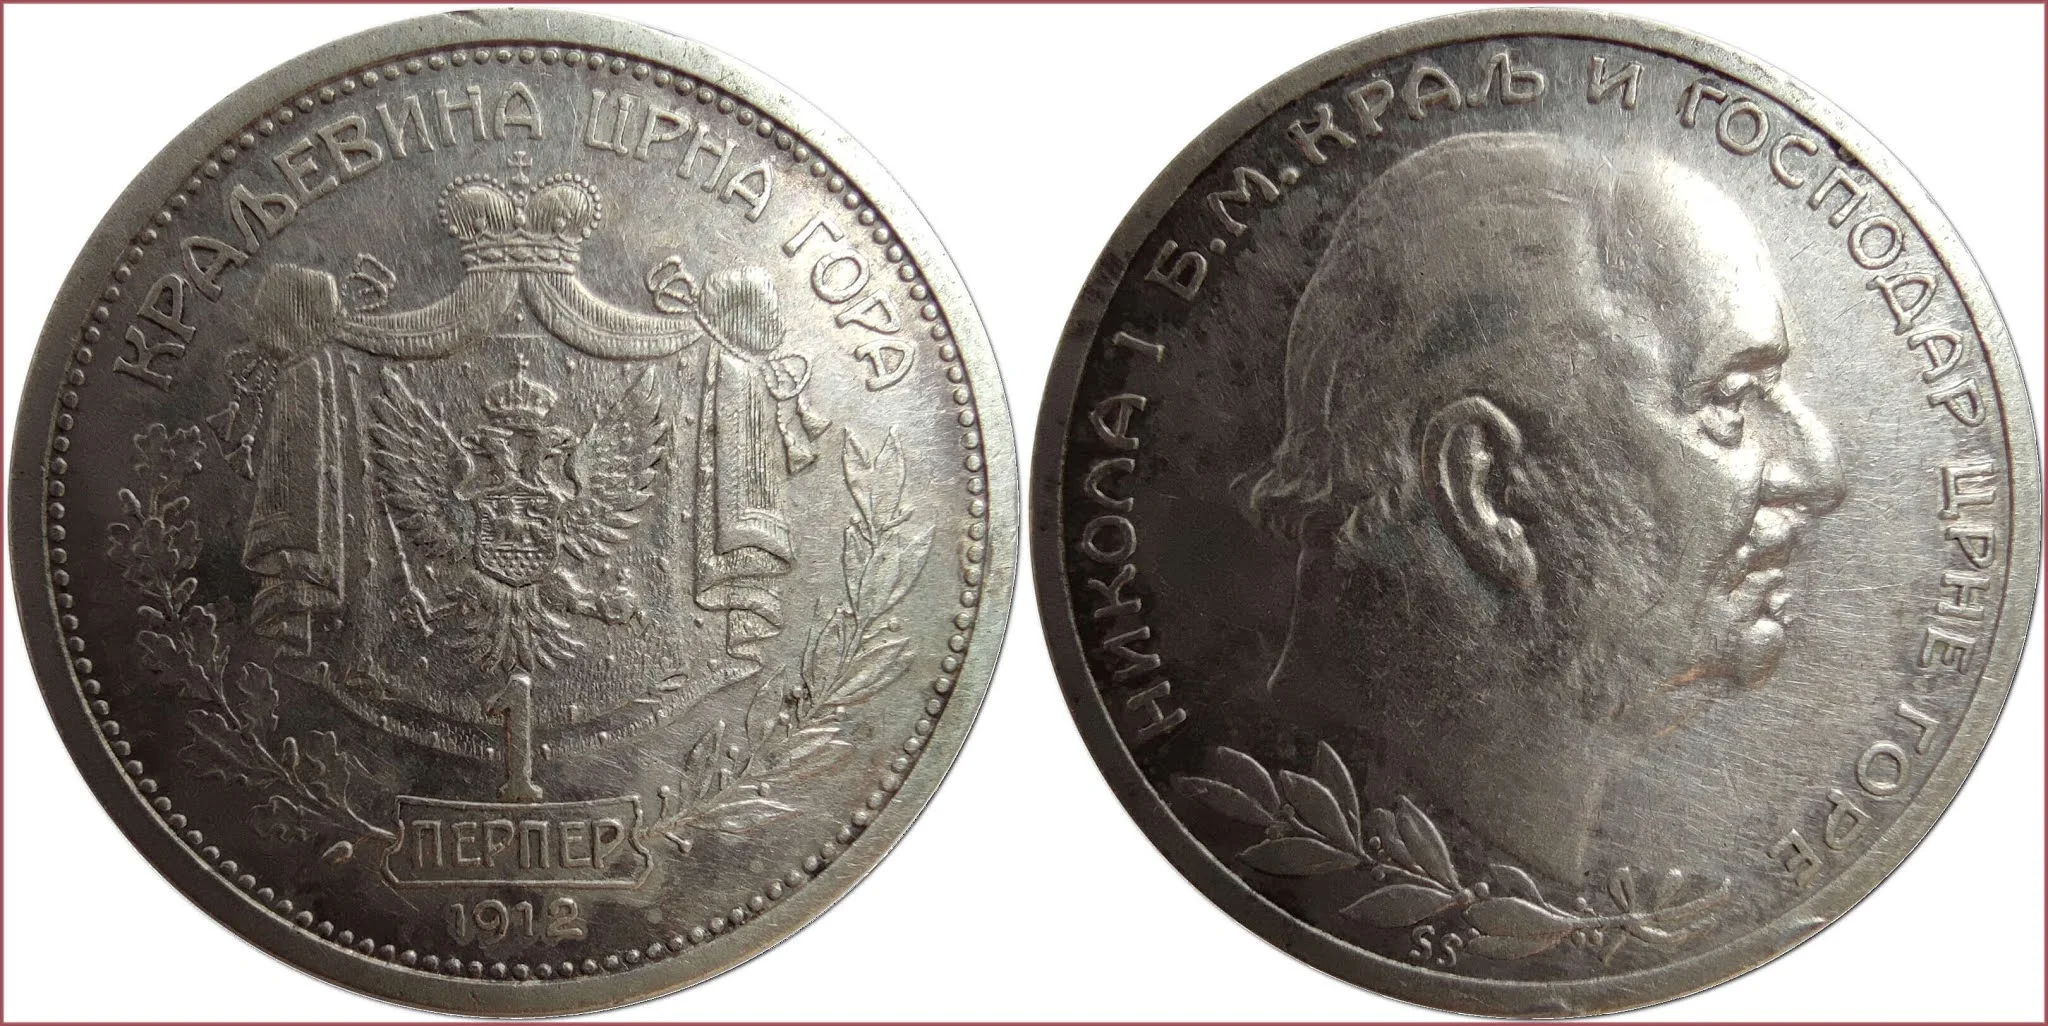 1 perper (перпер), 1912: Kingdom of Montenegro